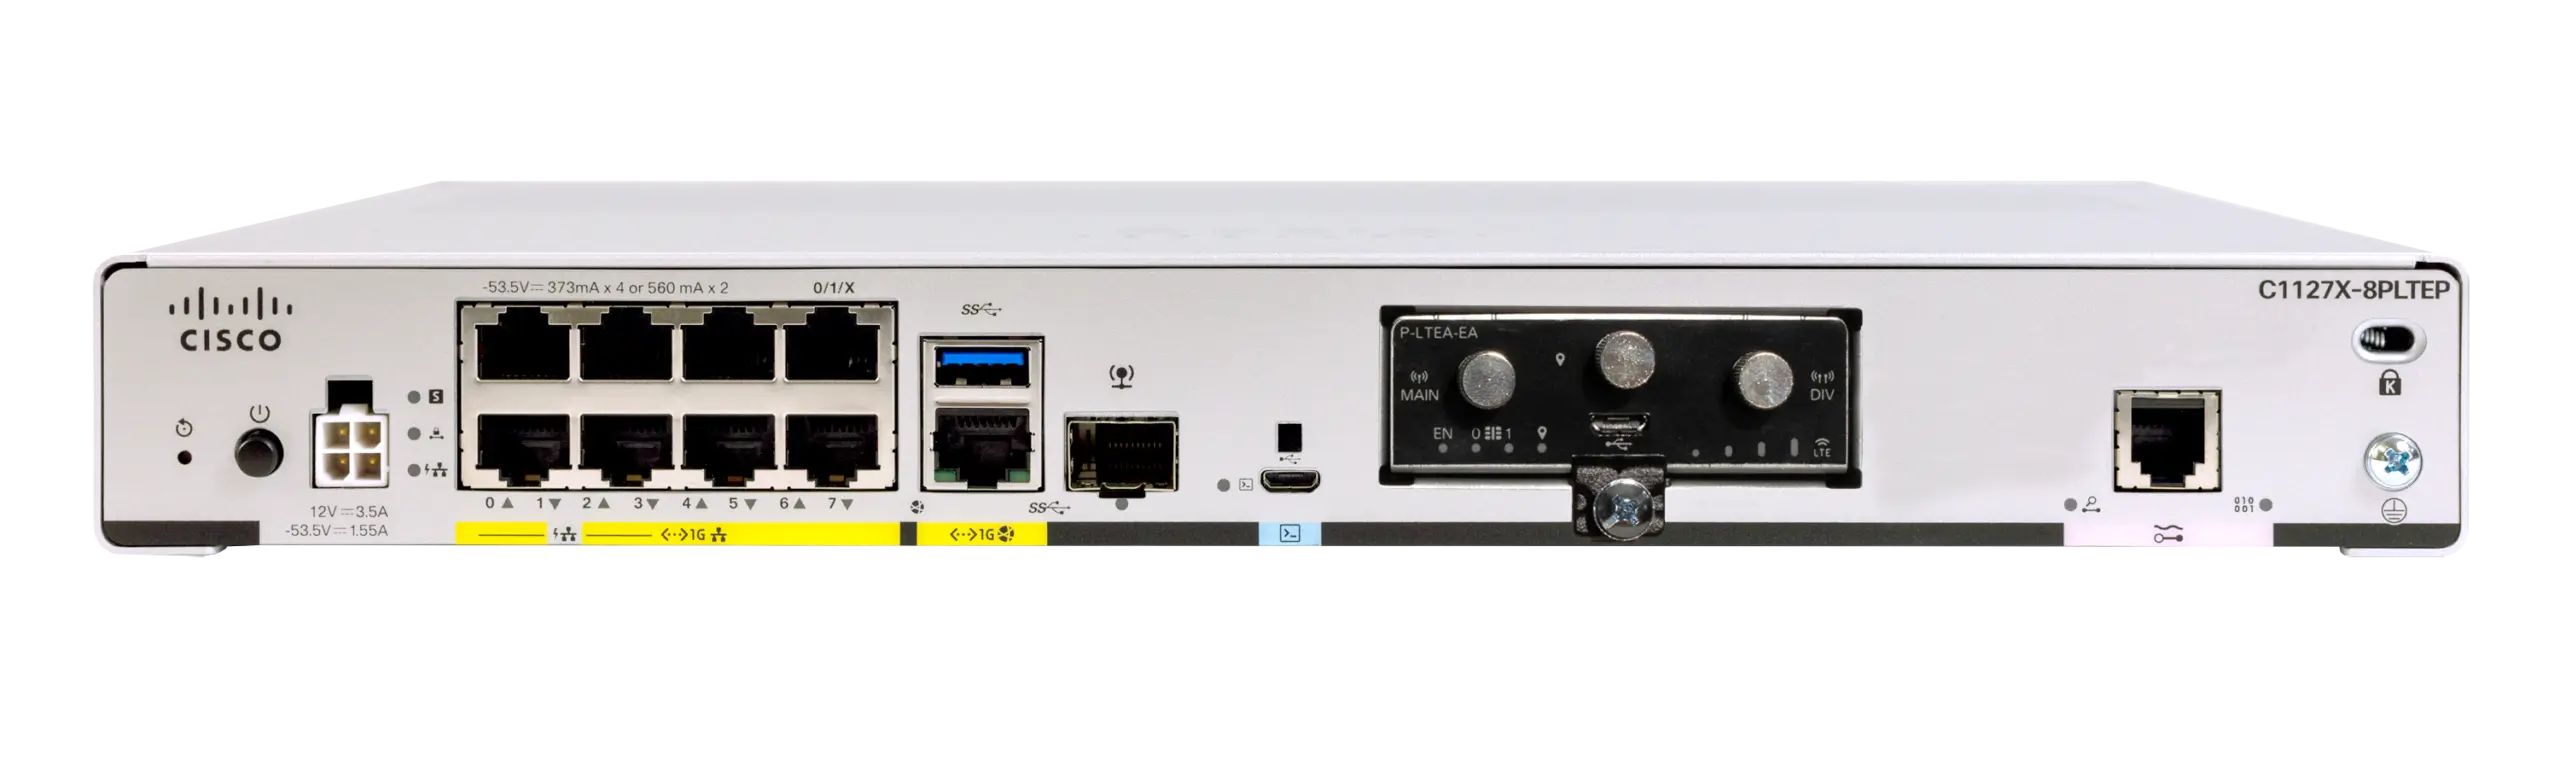 Cisco C1127X-8PLTEP - Router